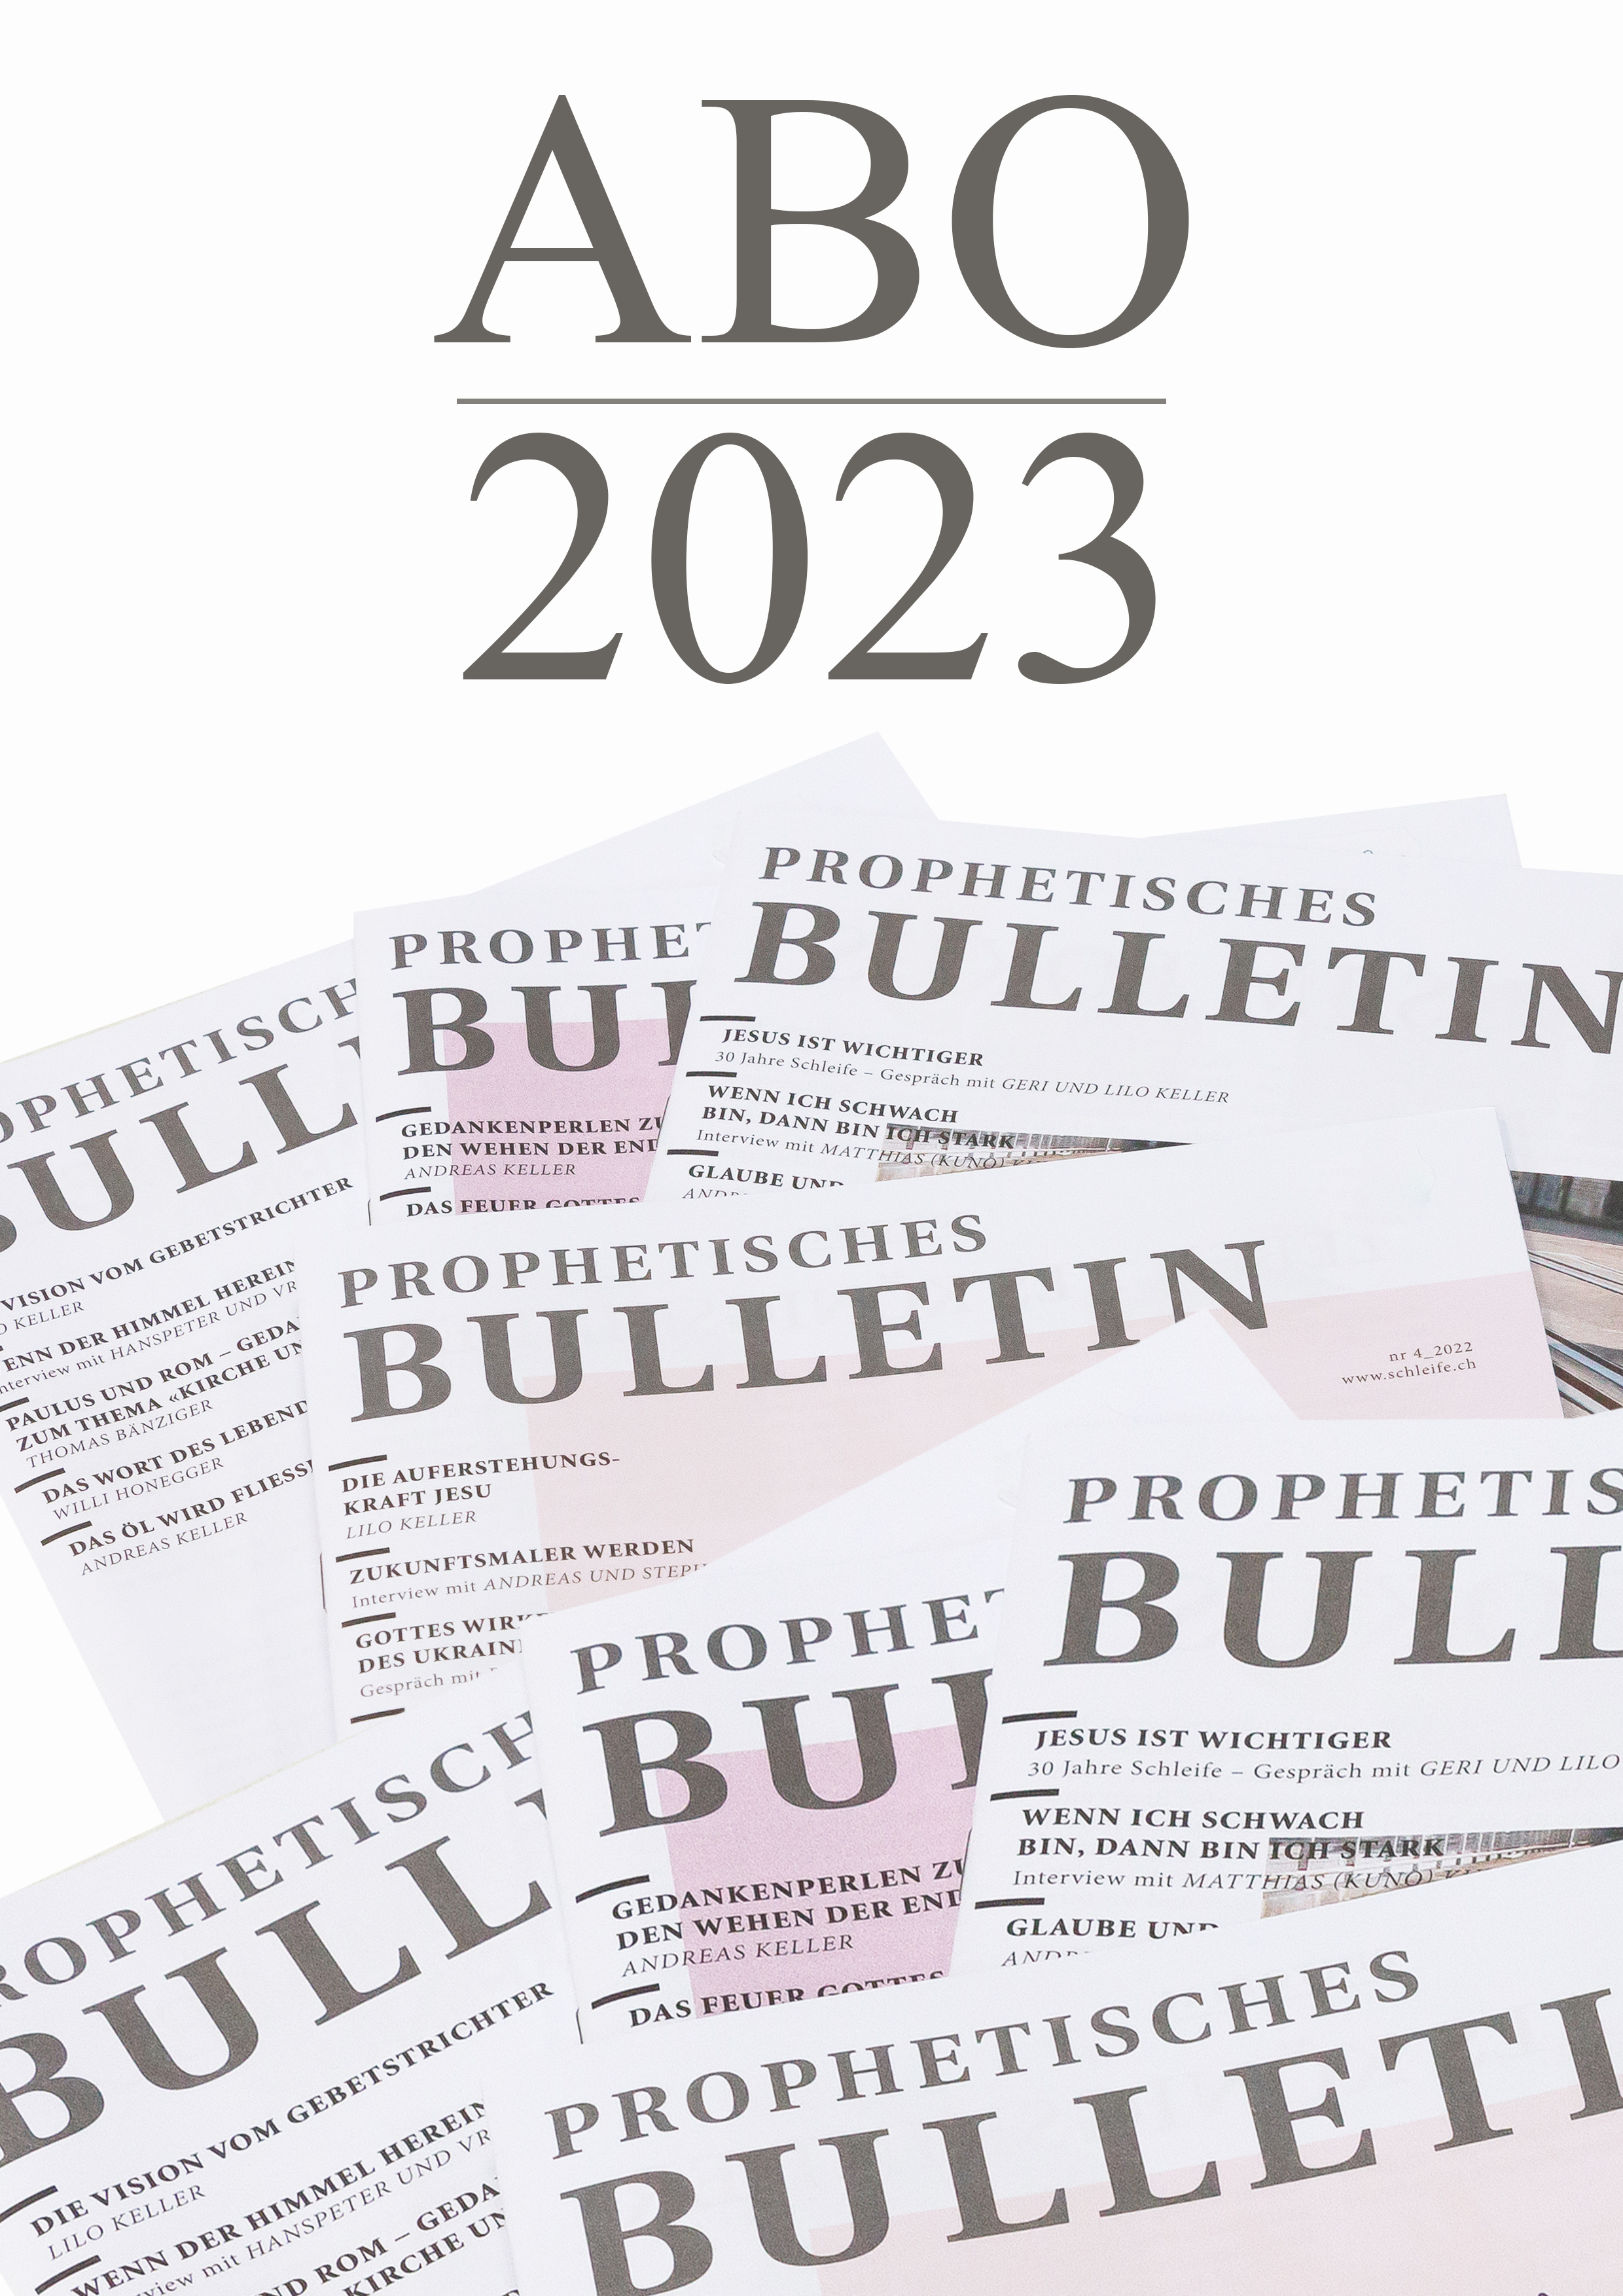 Abo Prophetisches Bulletin 2023